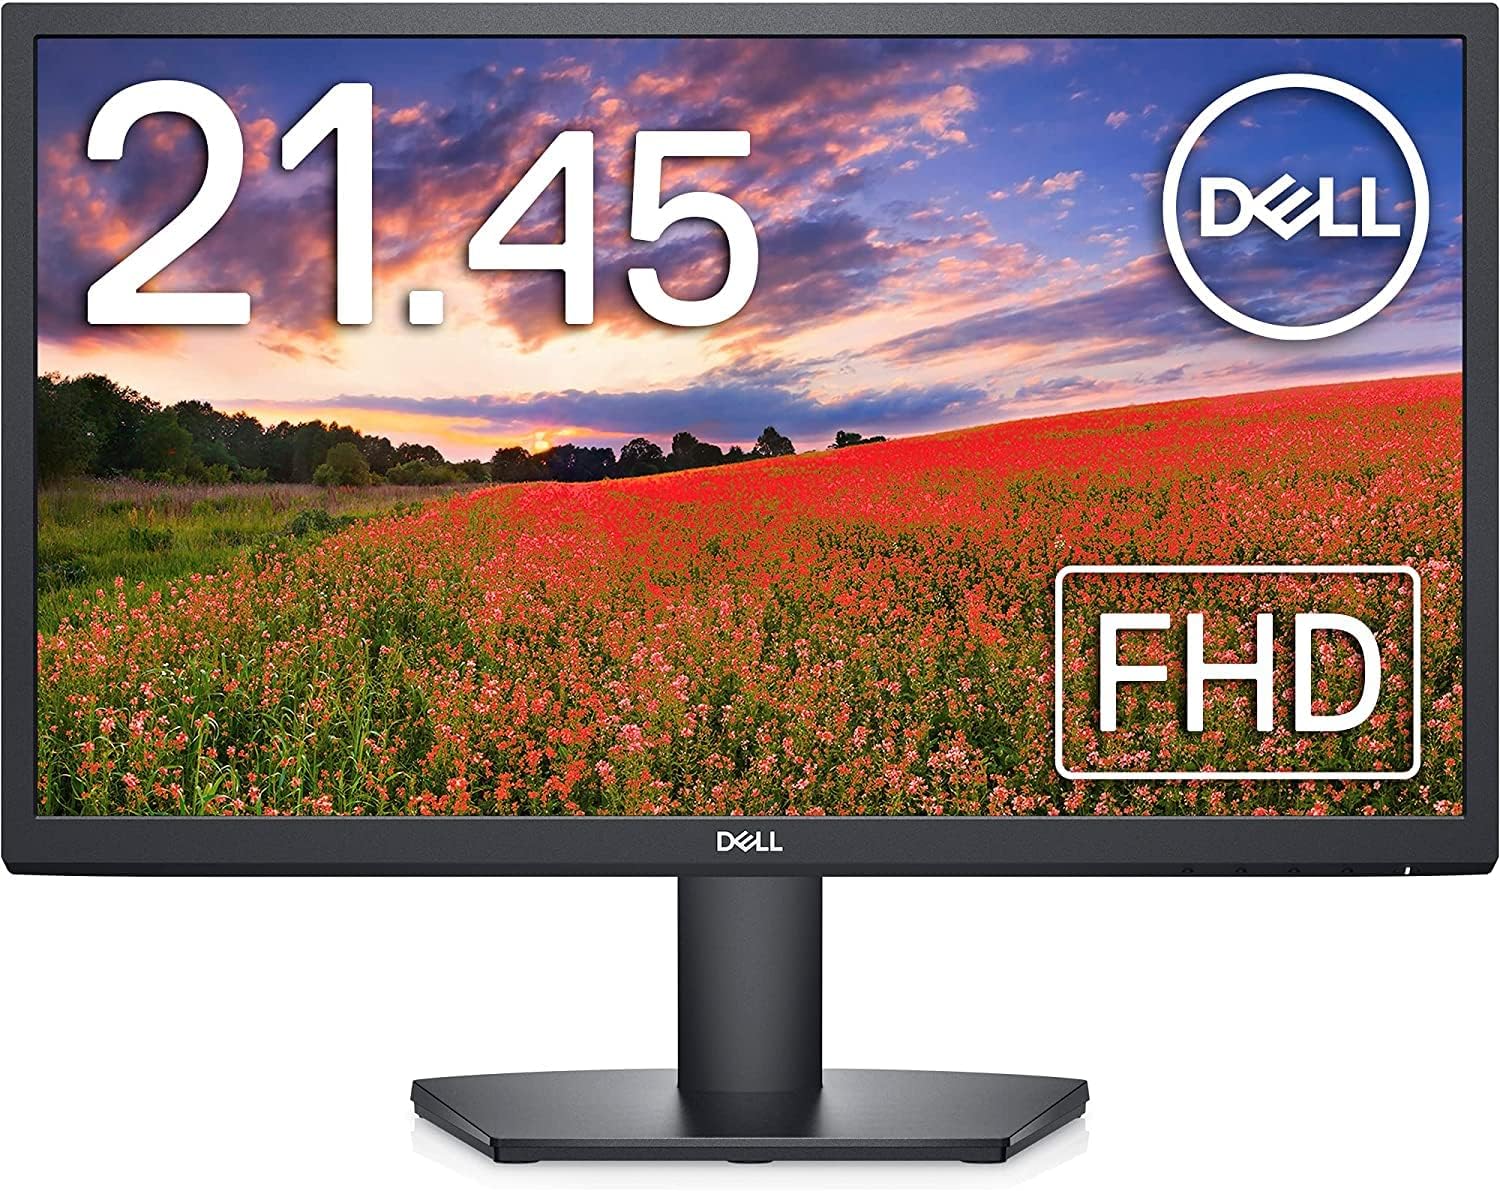 Dell 22 Monitor - SE2222H 22 8ms (gtg), VA (Vertical [...]